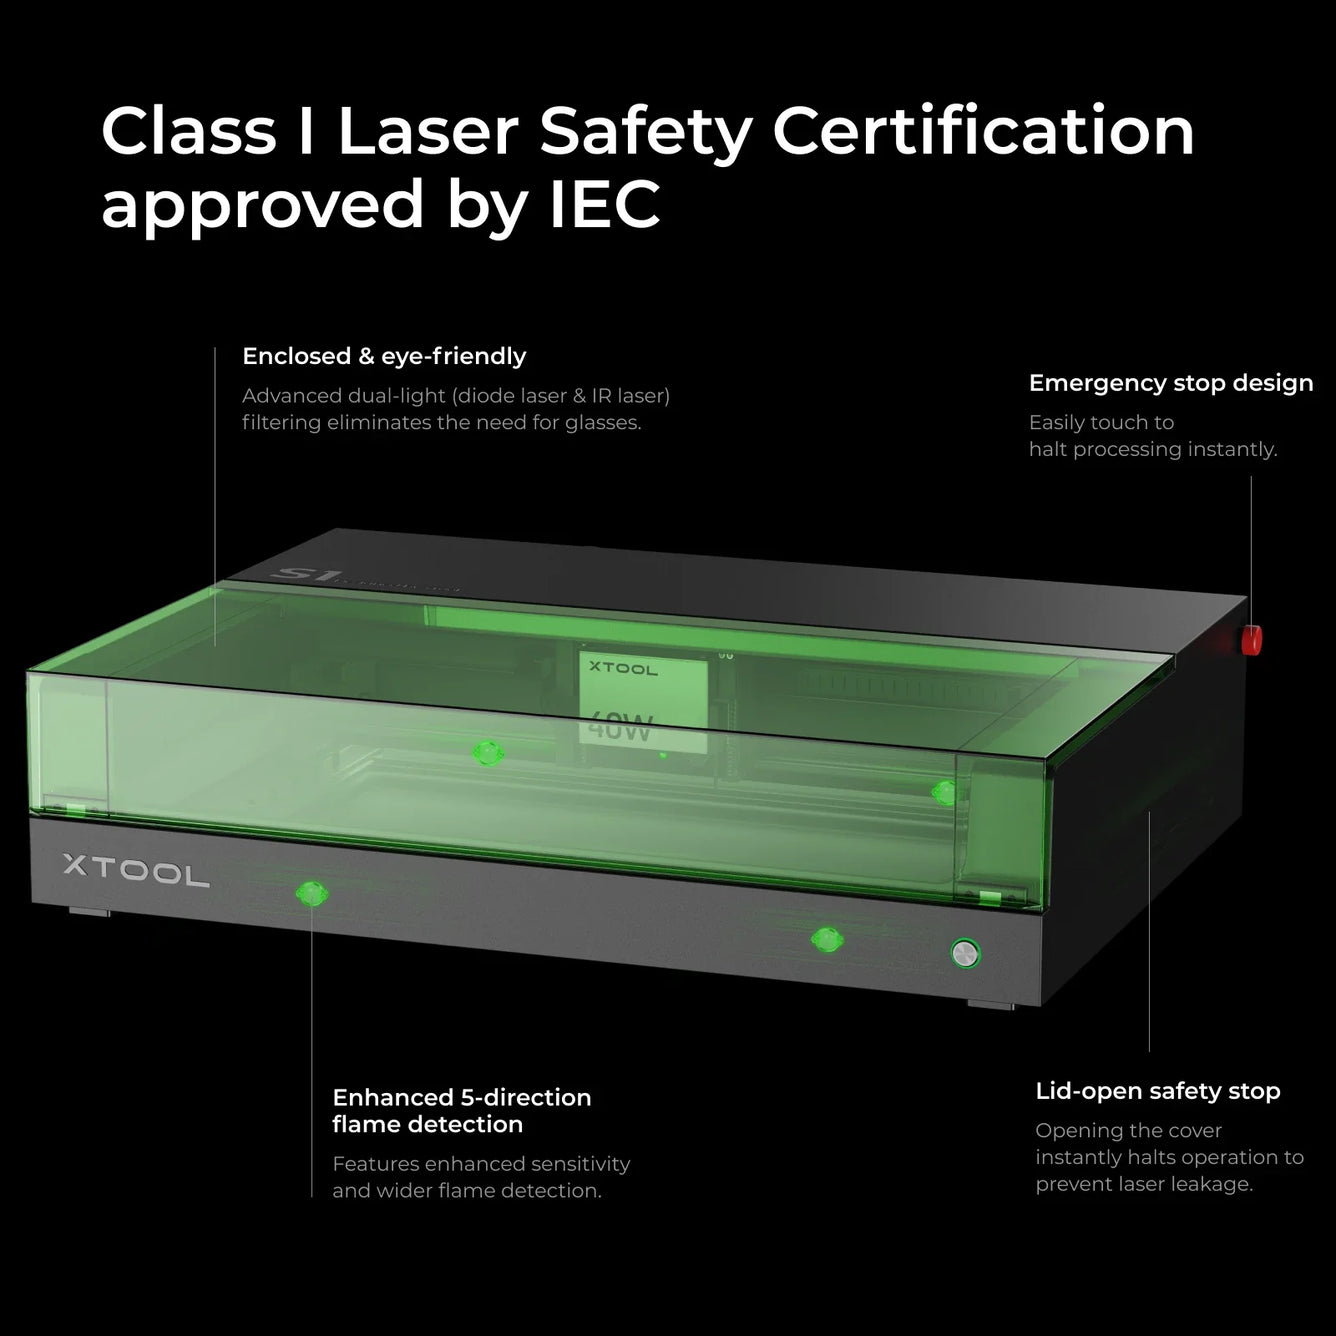 xTool D1 Pro Laser Engraver Boasts Powerful Improvements (Ad)